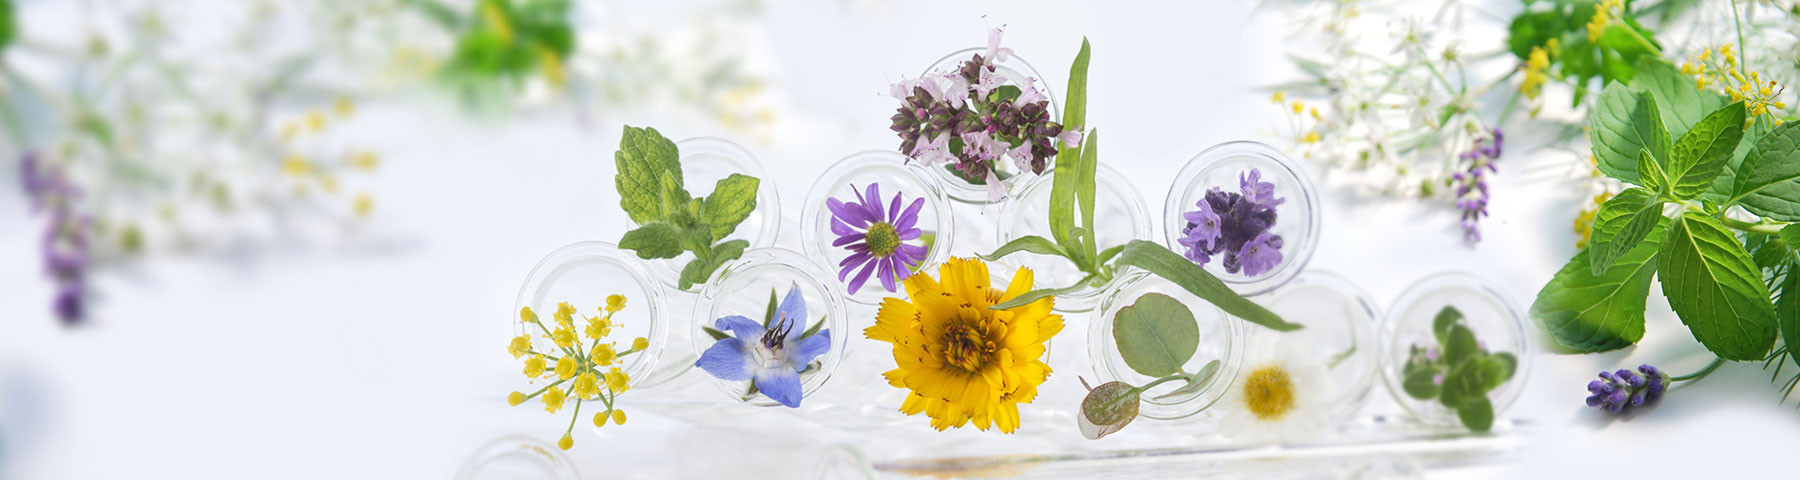 Herbal Products | Arkopharma